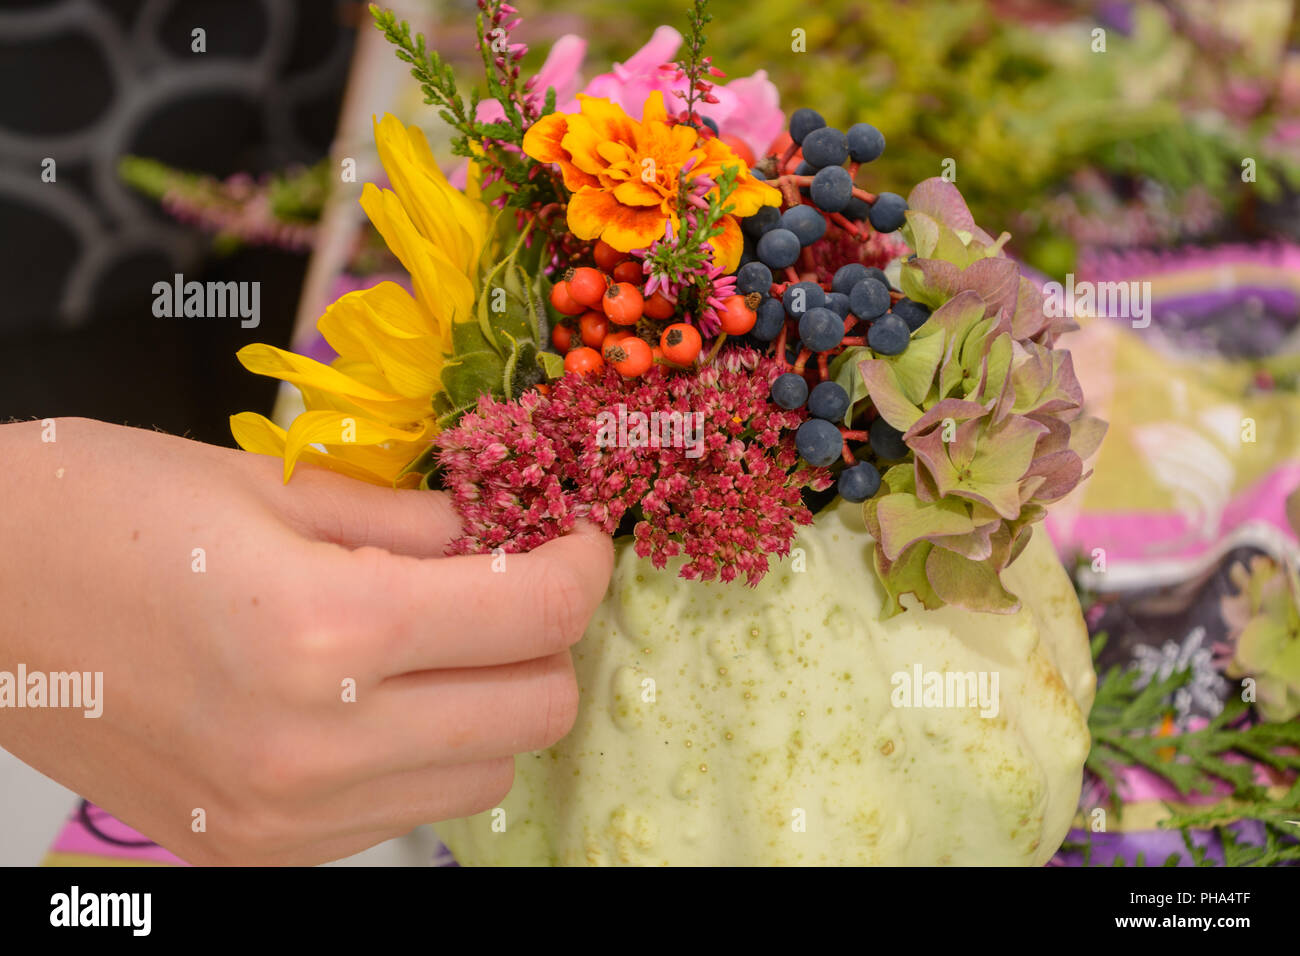 Florist designing colorful autumn arrangement from flowers - close-up Stock Photo